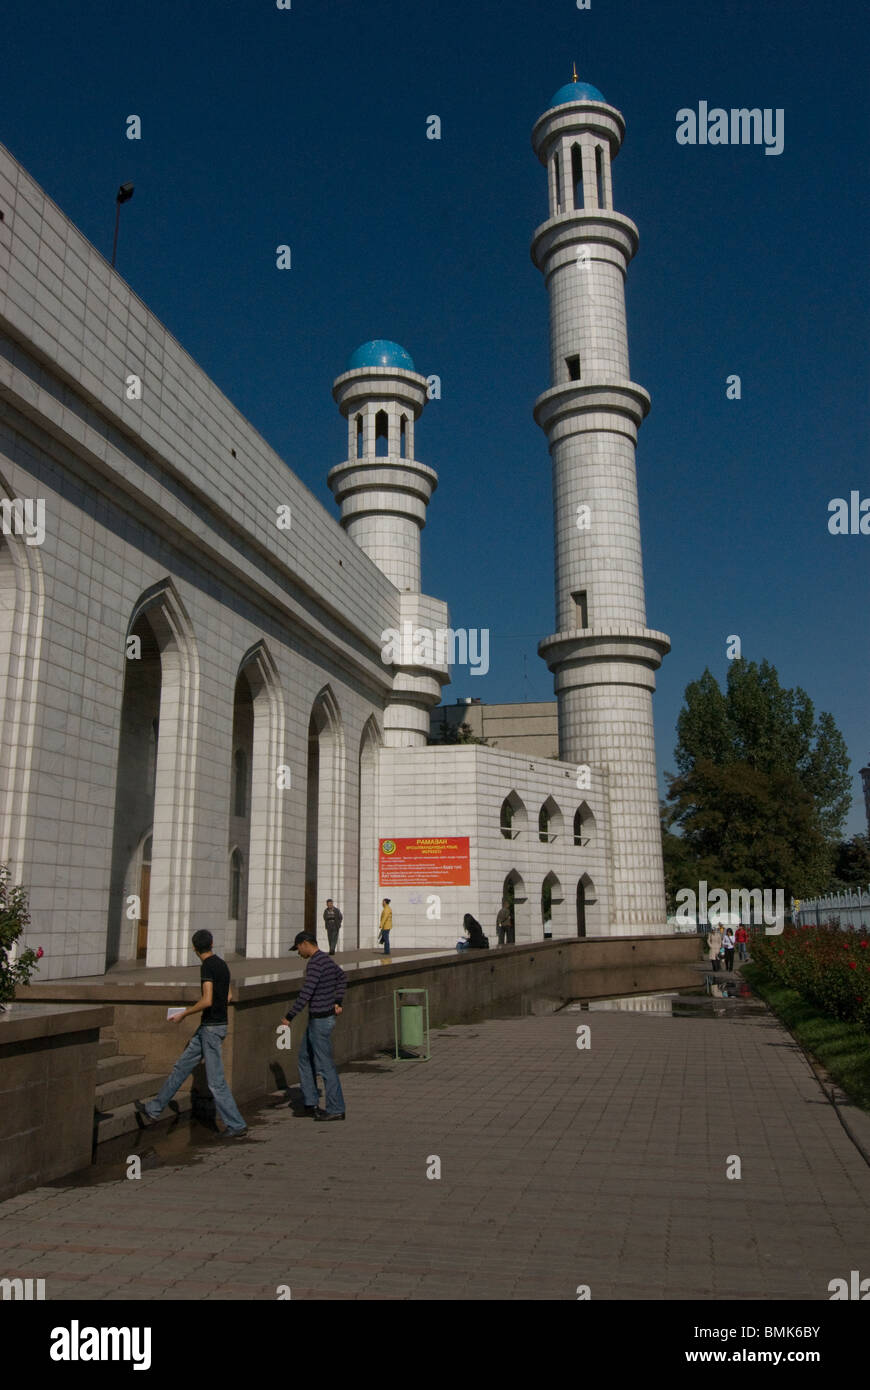 Central mosque, Almaty, Kazakhstan Stock Photo